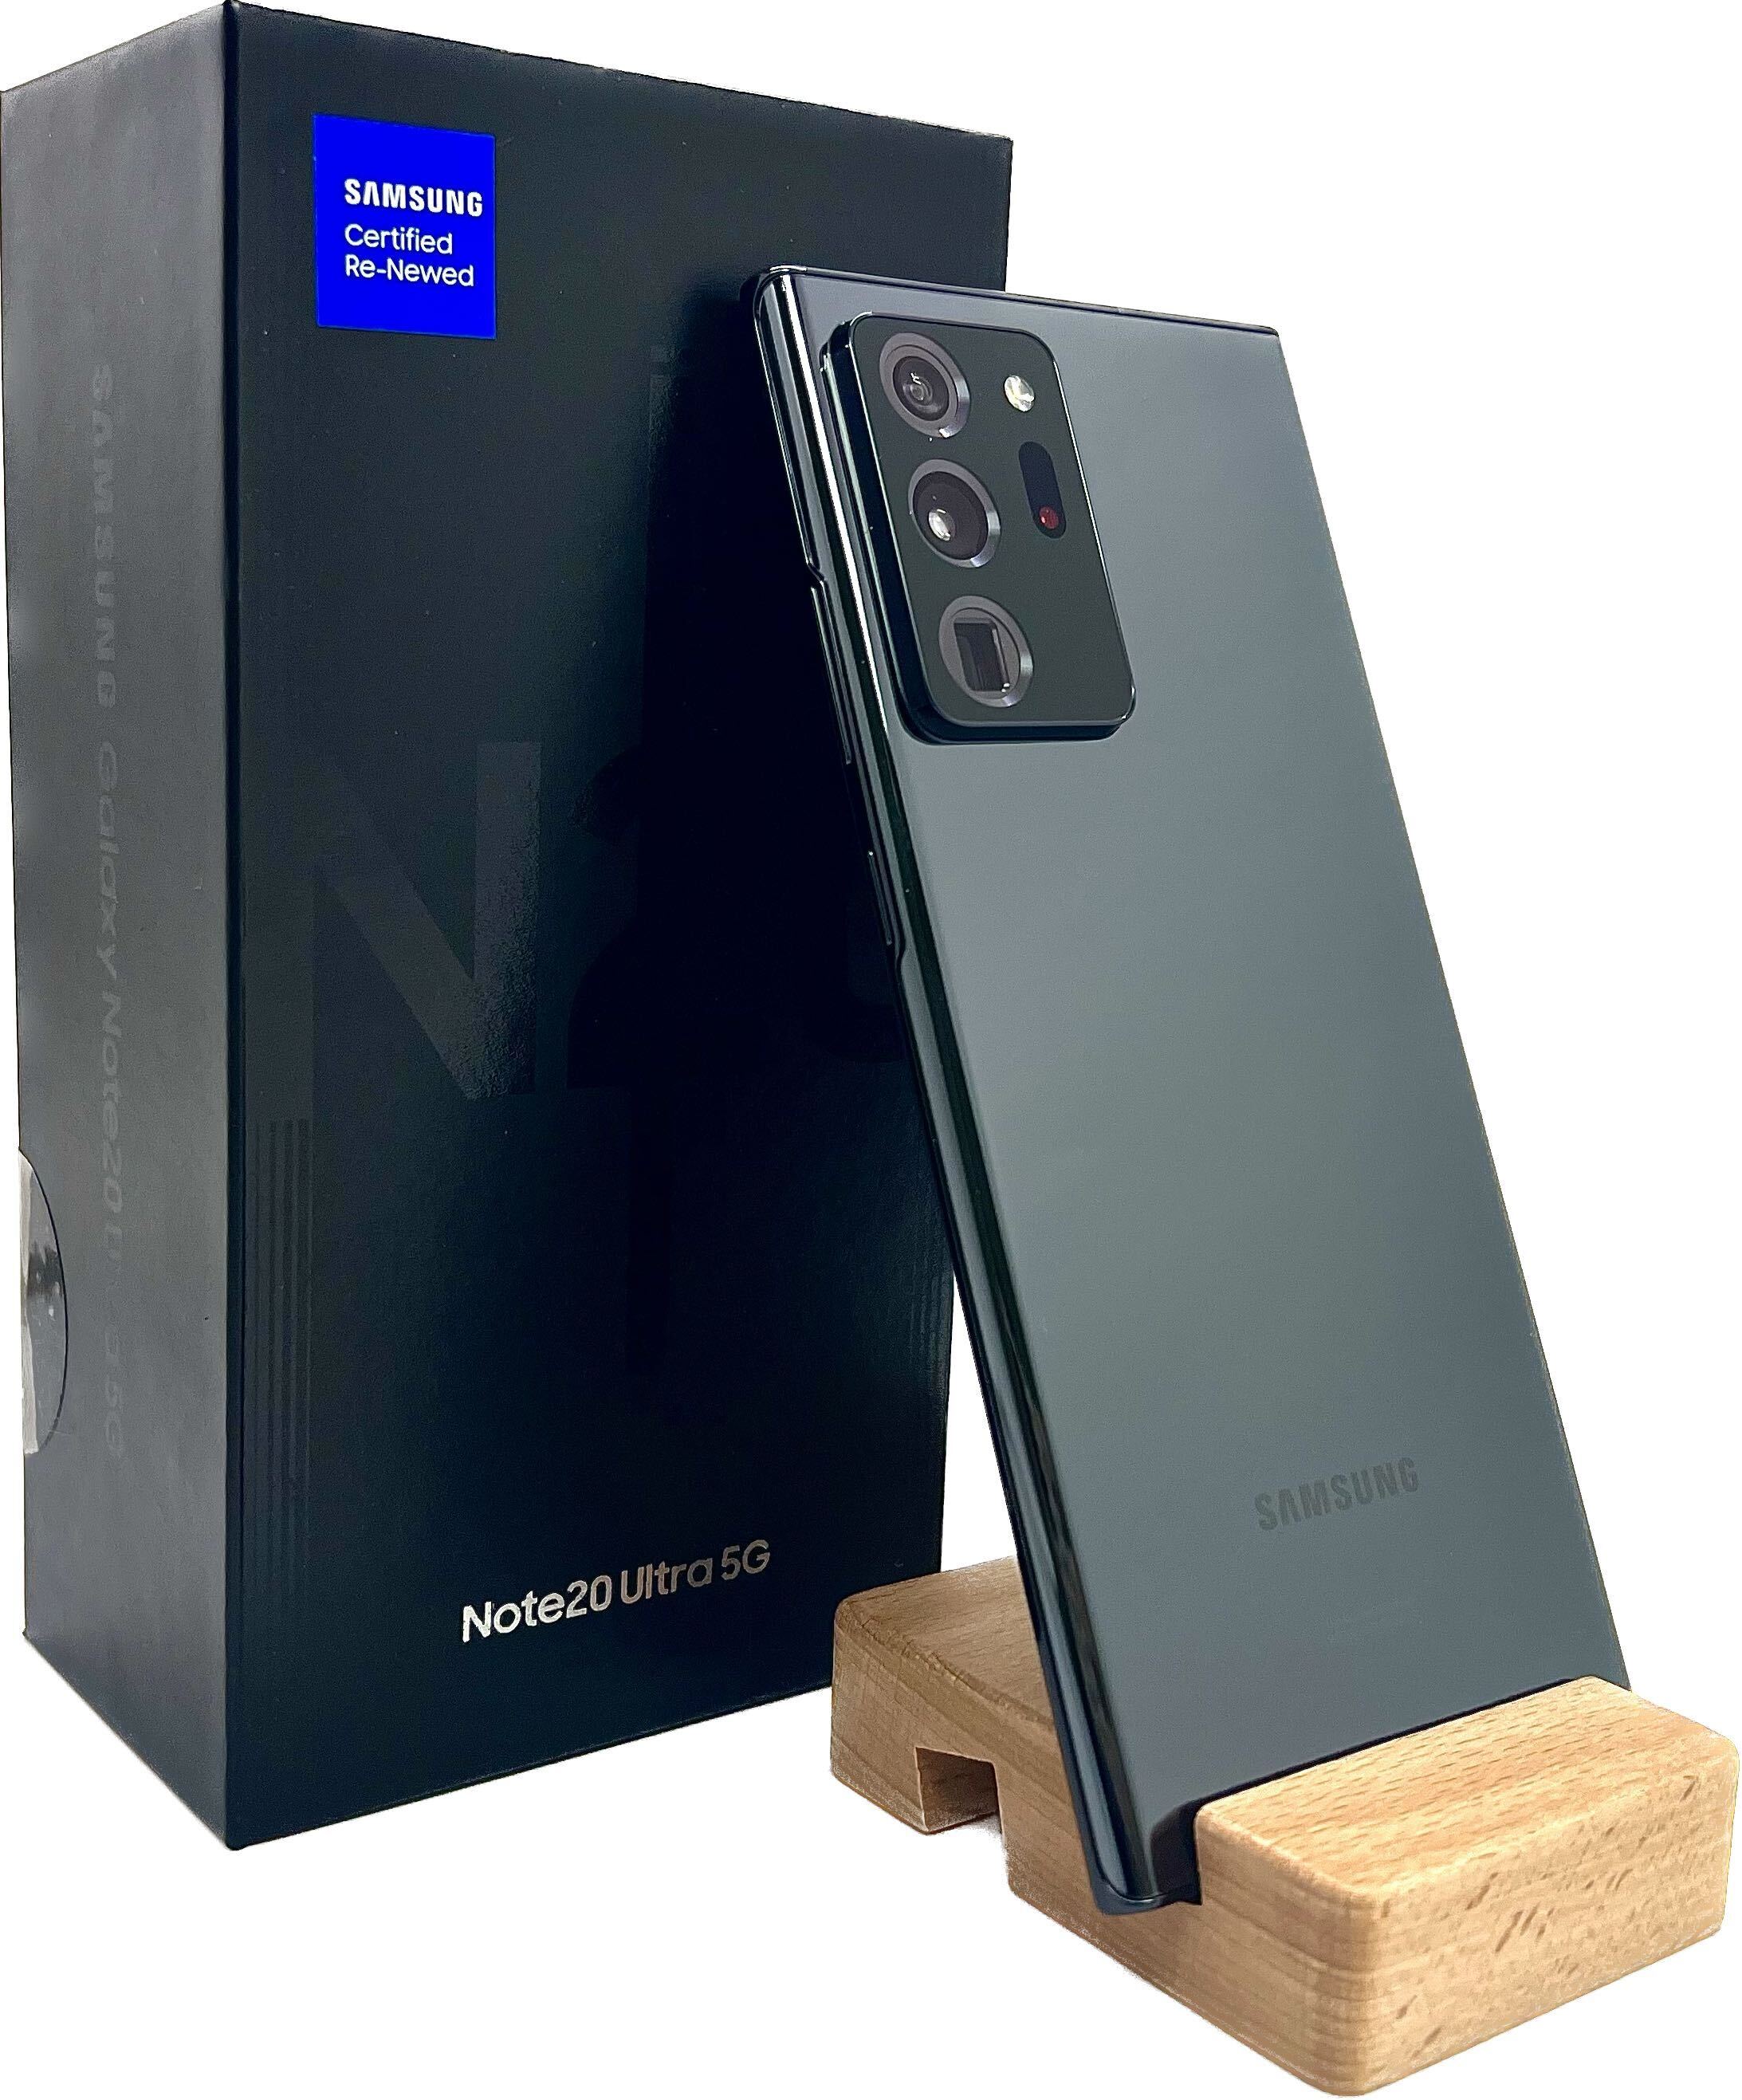 Samsung Galaxy Note20 Ultra 5G Certified Renewed (Unlocked)